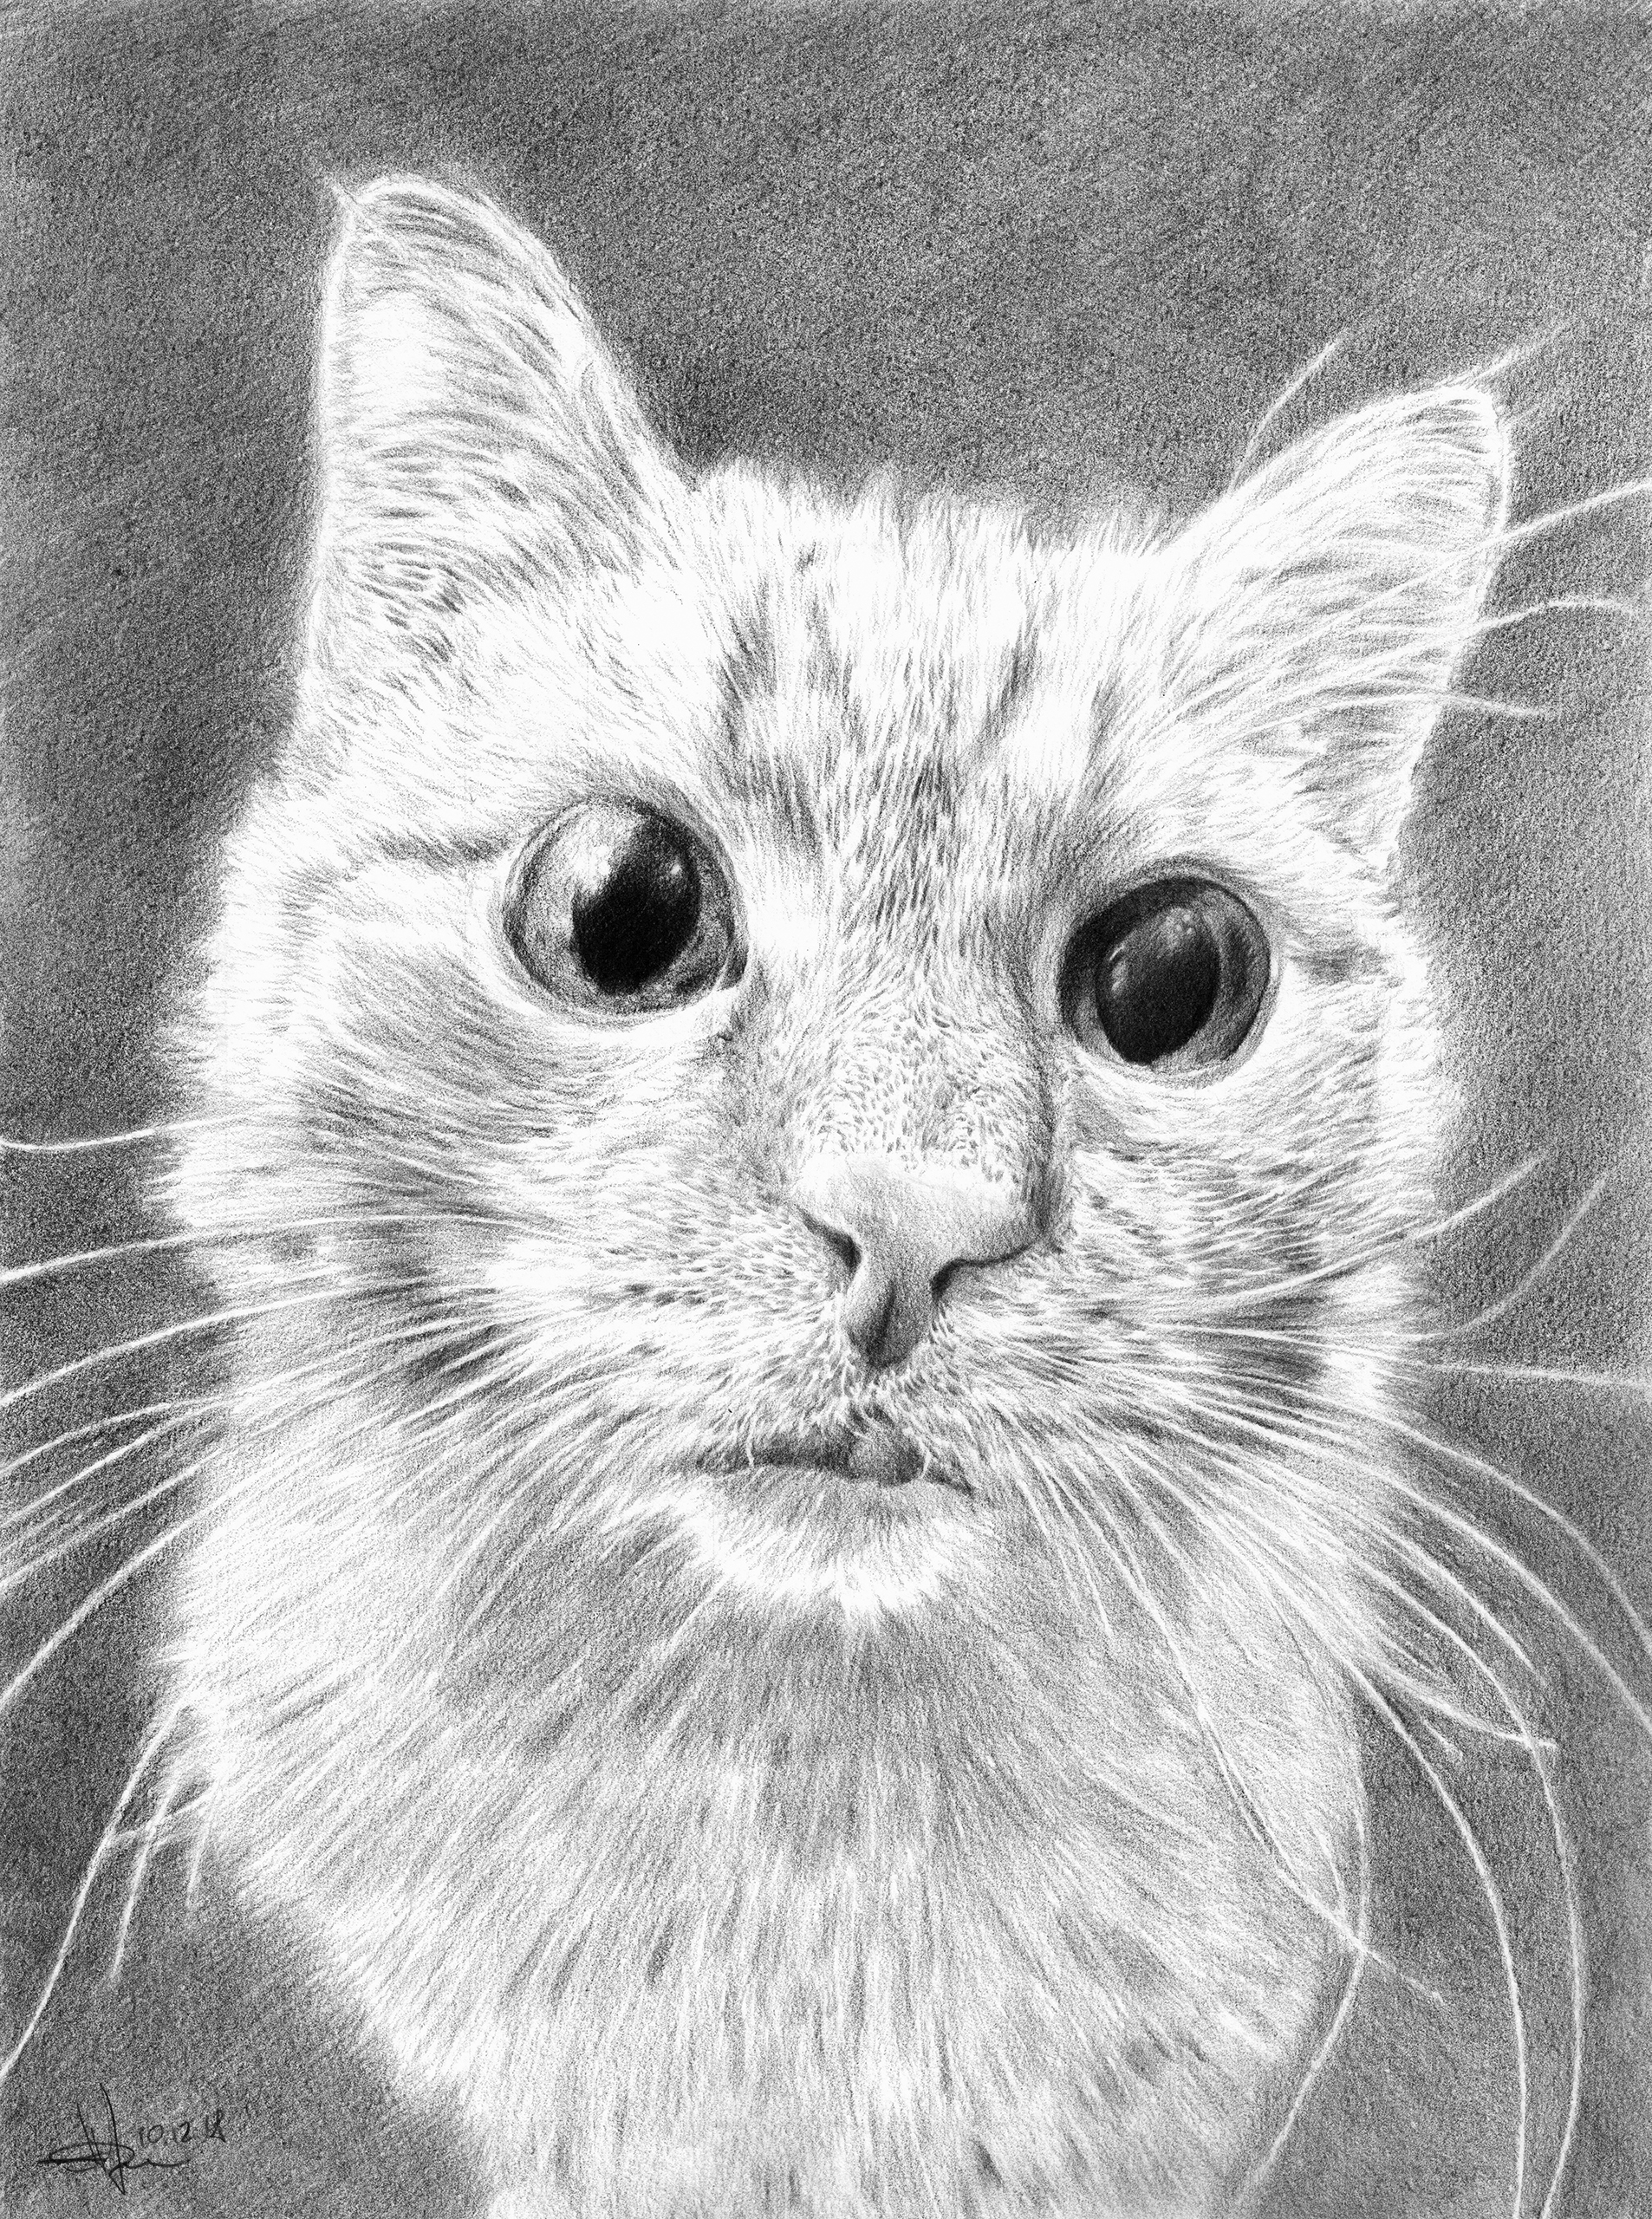 Фото рисунка кошки. Кошка рисунок. Кот карандашом. Котик рисунок карандашом. Кошка рисунок карандашом.